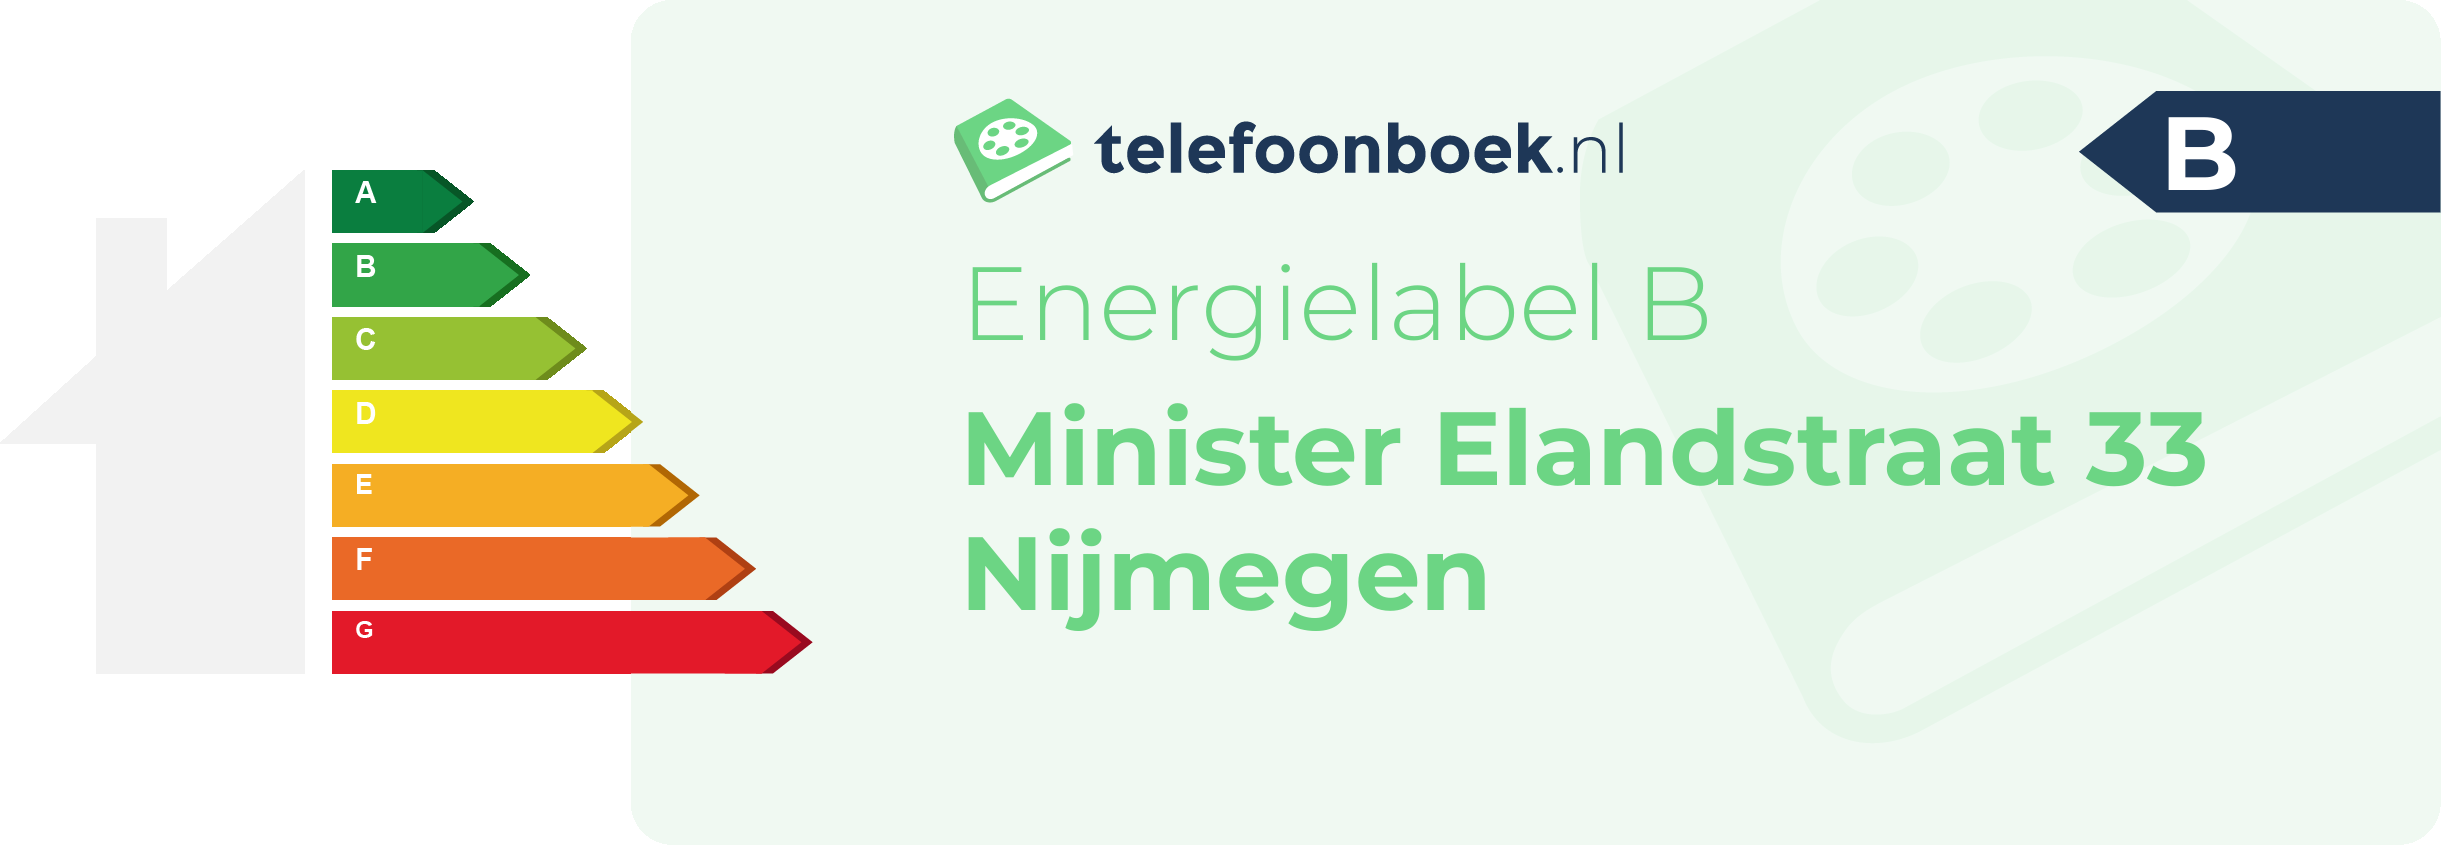 Energielabel Minister Elandstraat 33 Nijmegen